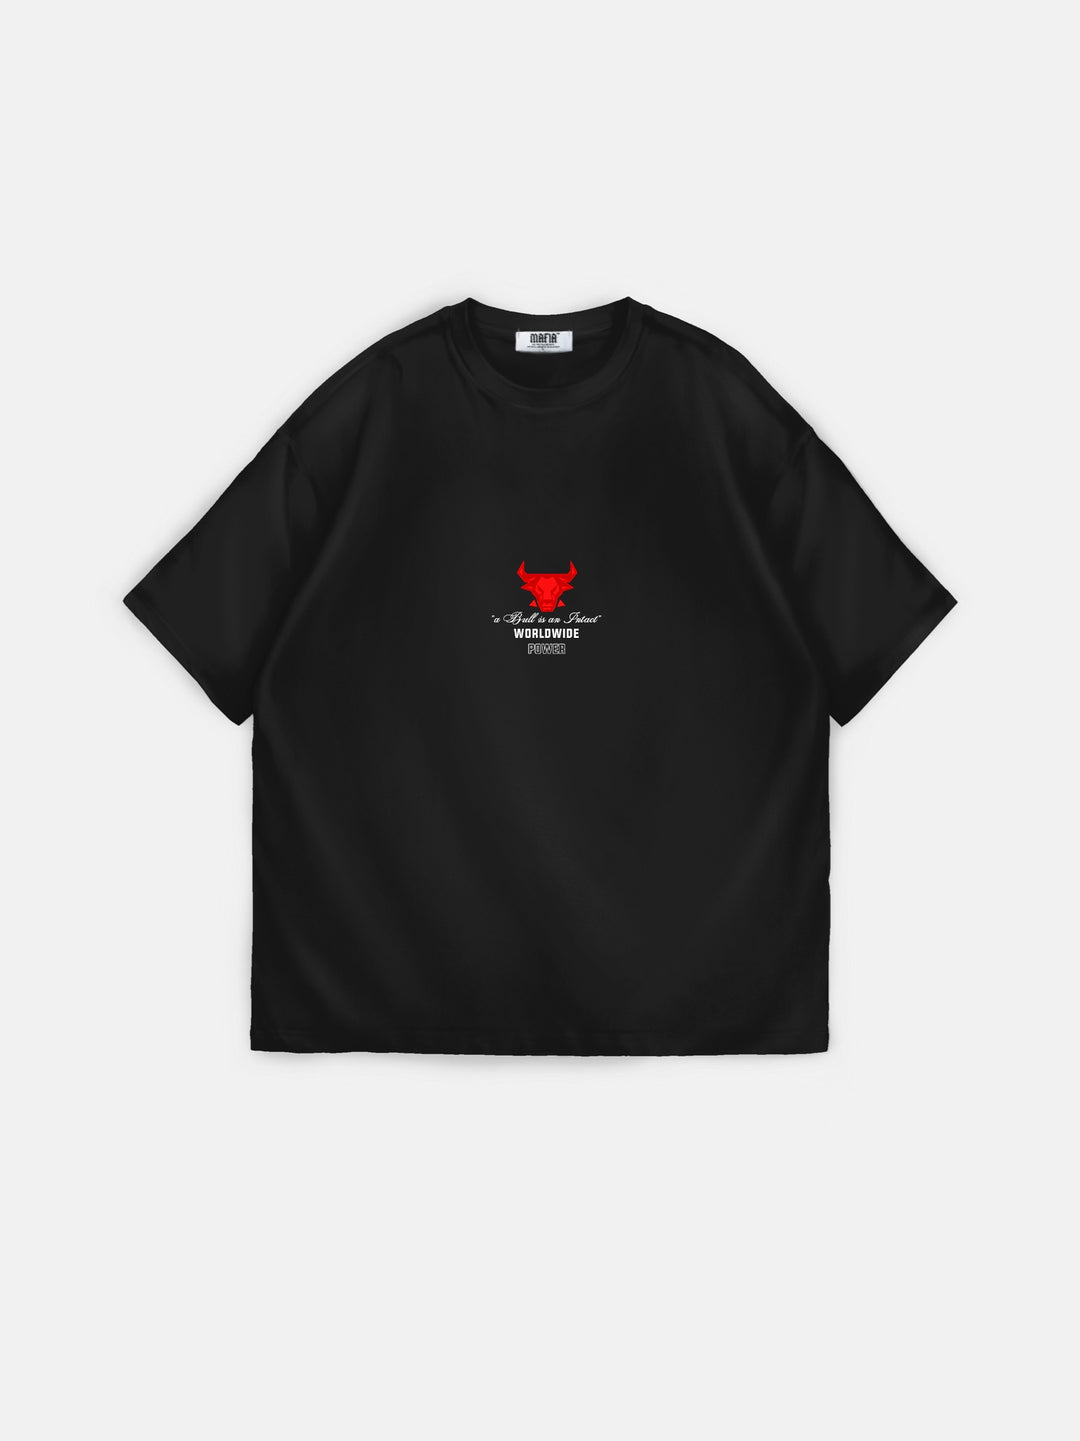 Oversize Bull Worldwide T-shirt - Black and Red